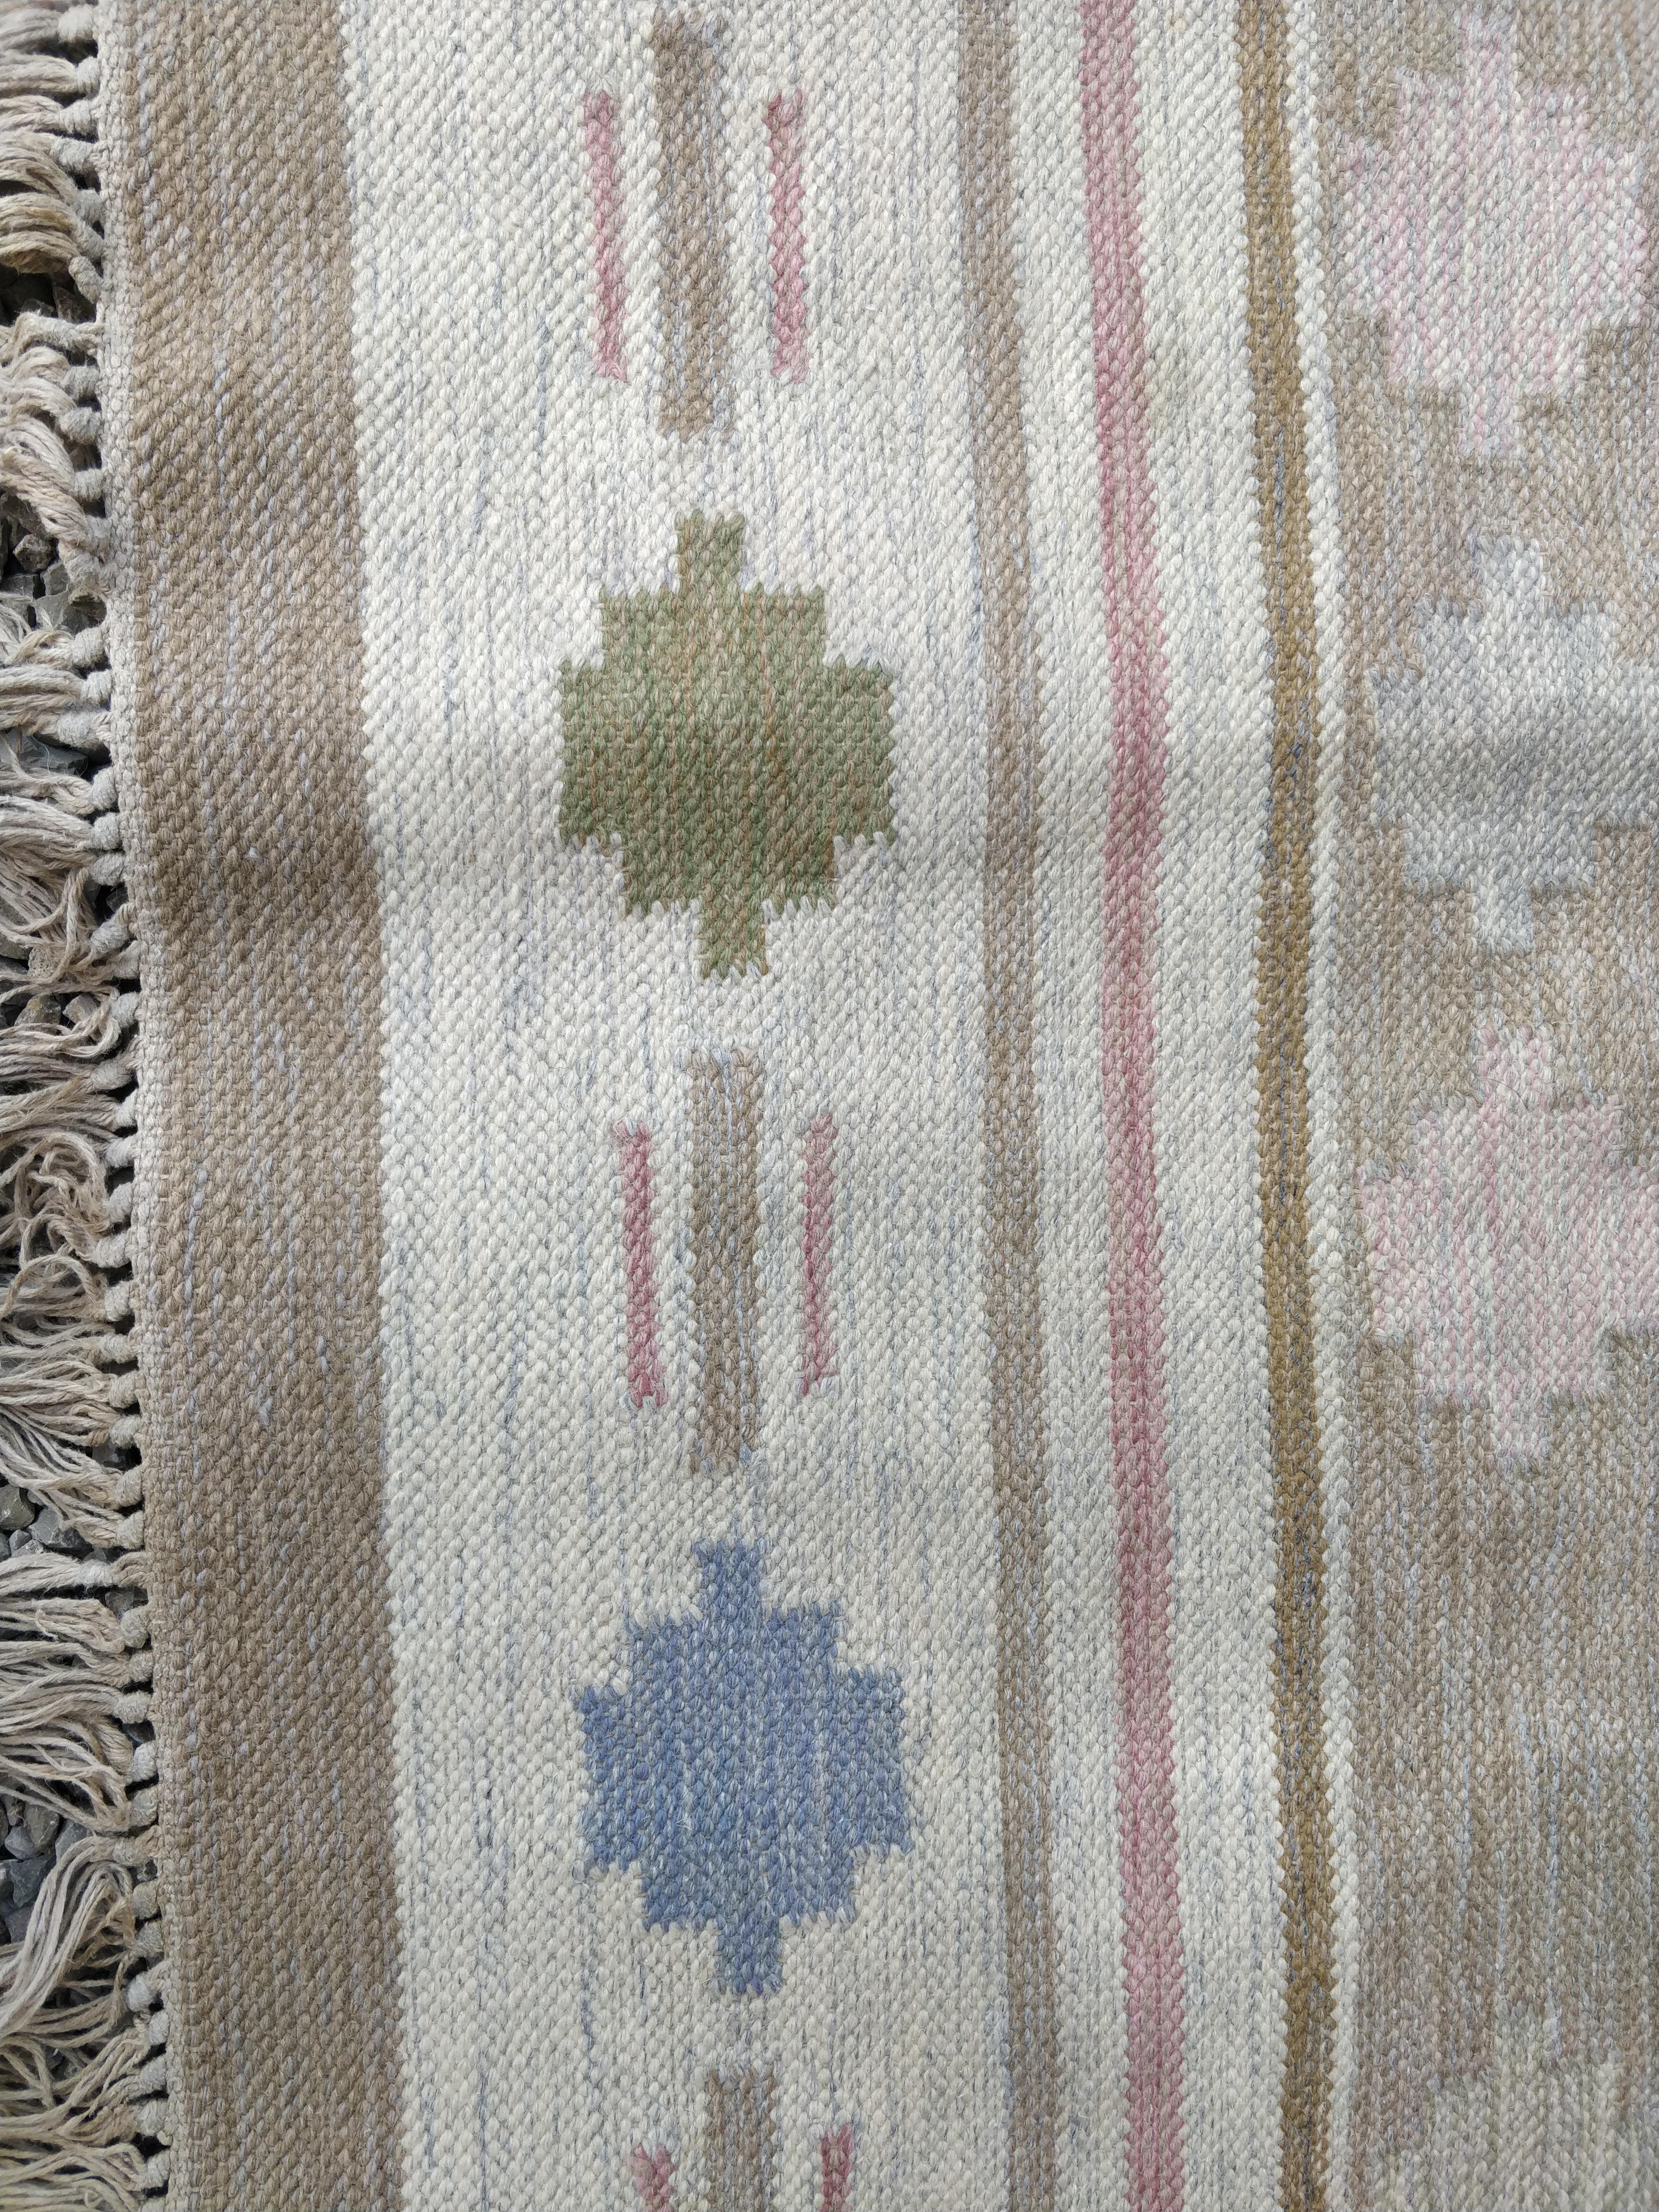  Flat-weave Kilim carpet by Swedish textile designer Anna Johanna Ångström   For Sale 6